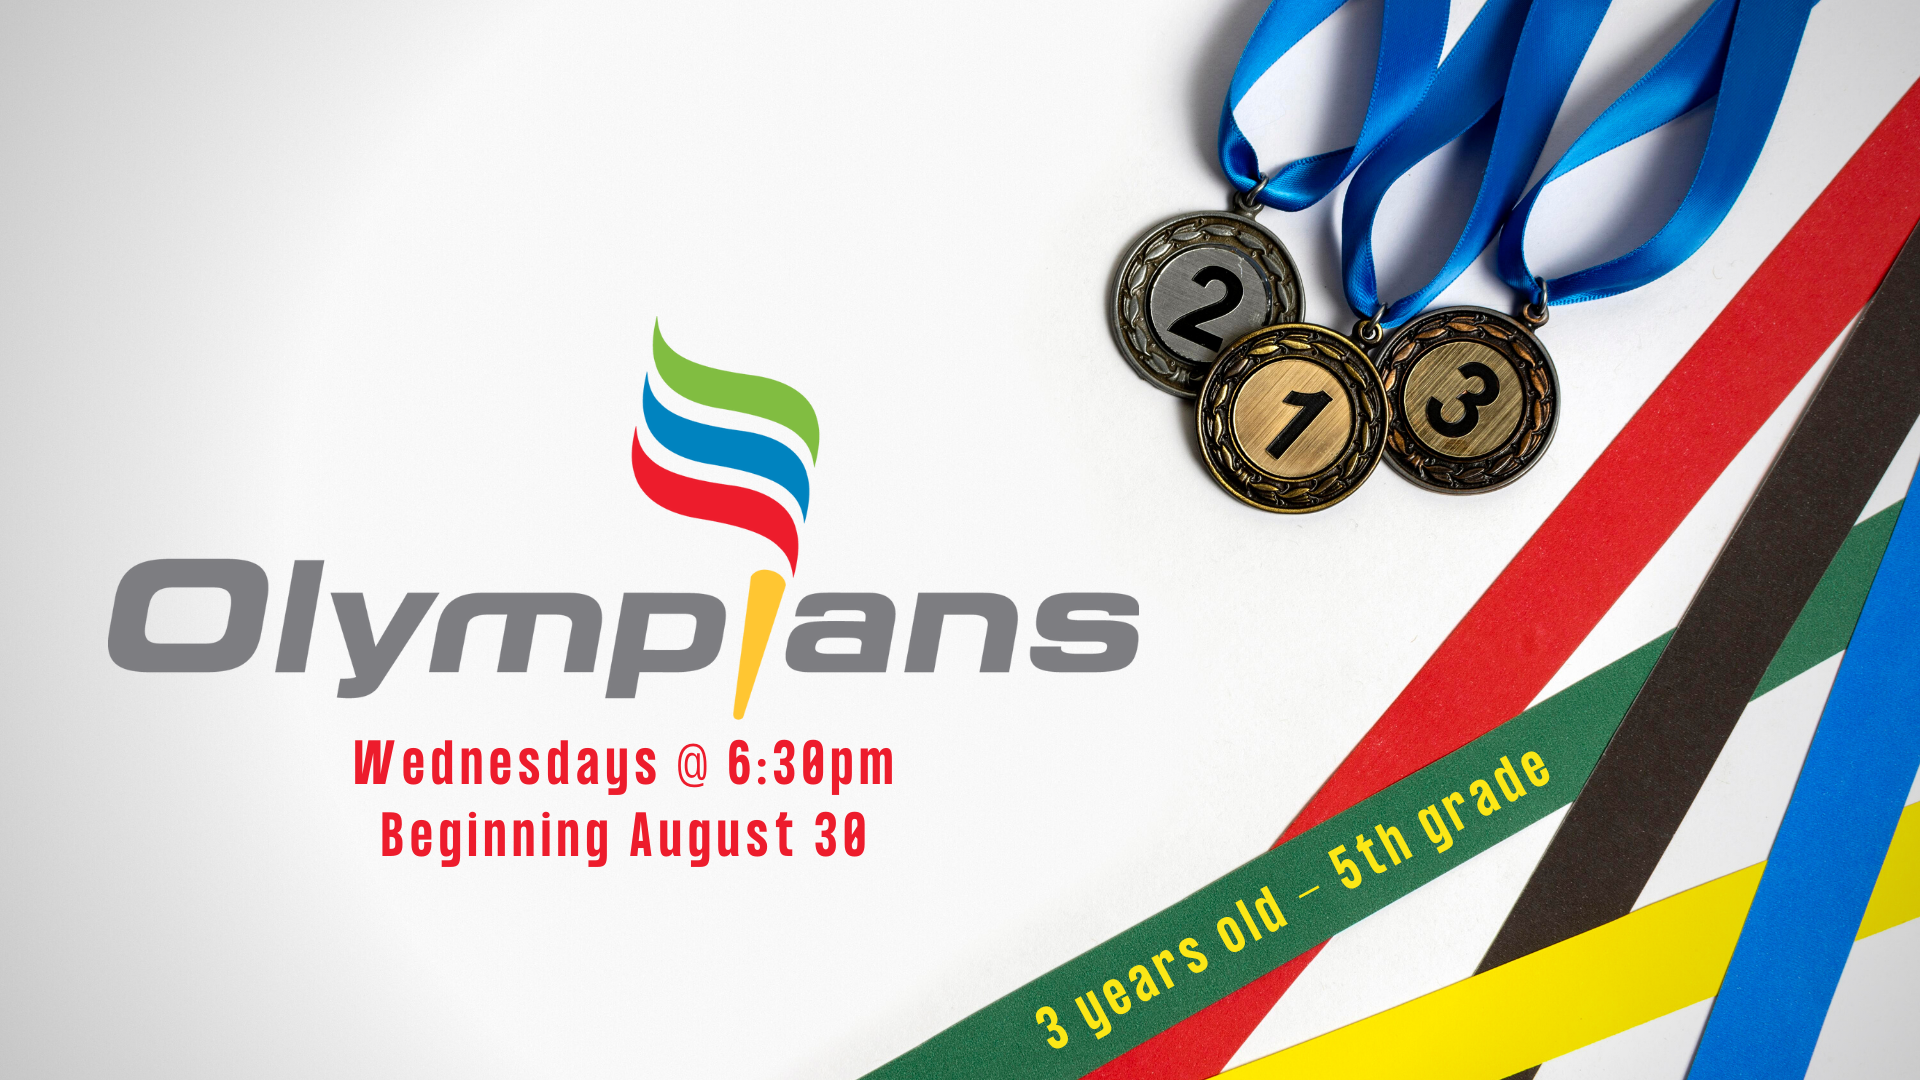 Olympians on Wednesday Nights